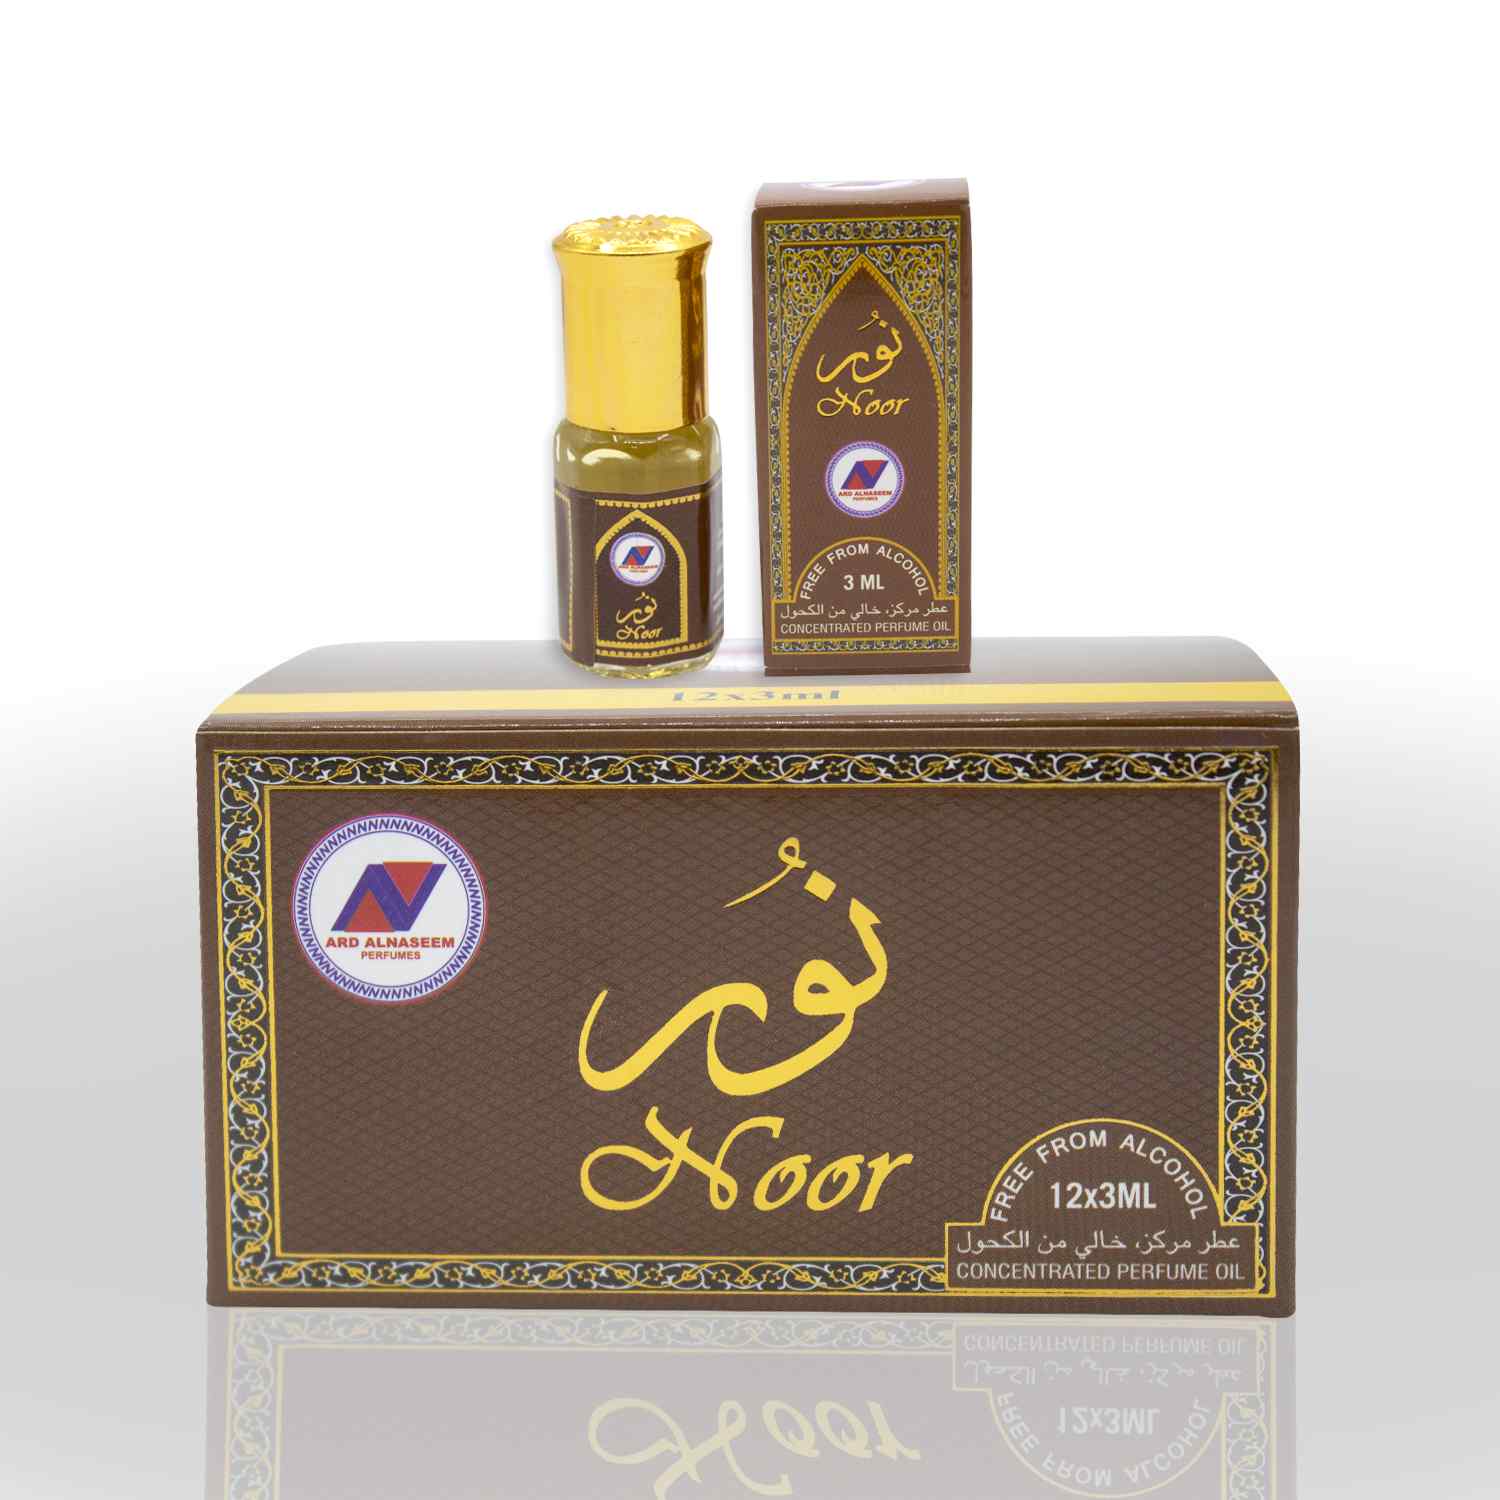 Noor-3ml-Rollan-Attar-by-ARD-perfumes